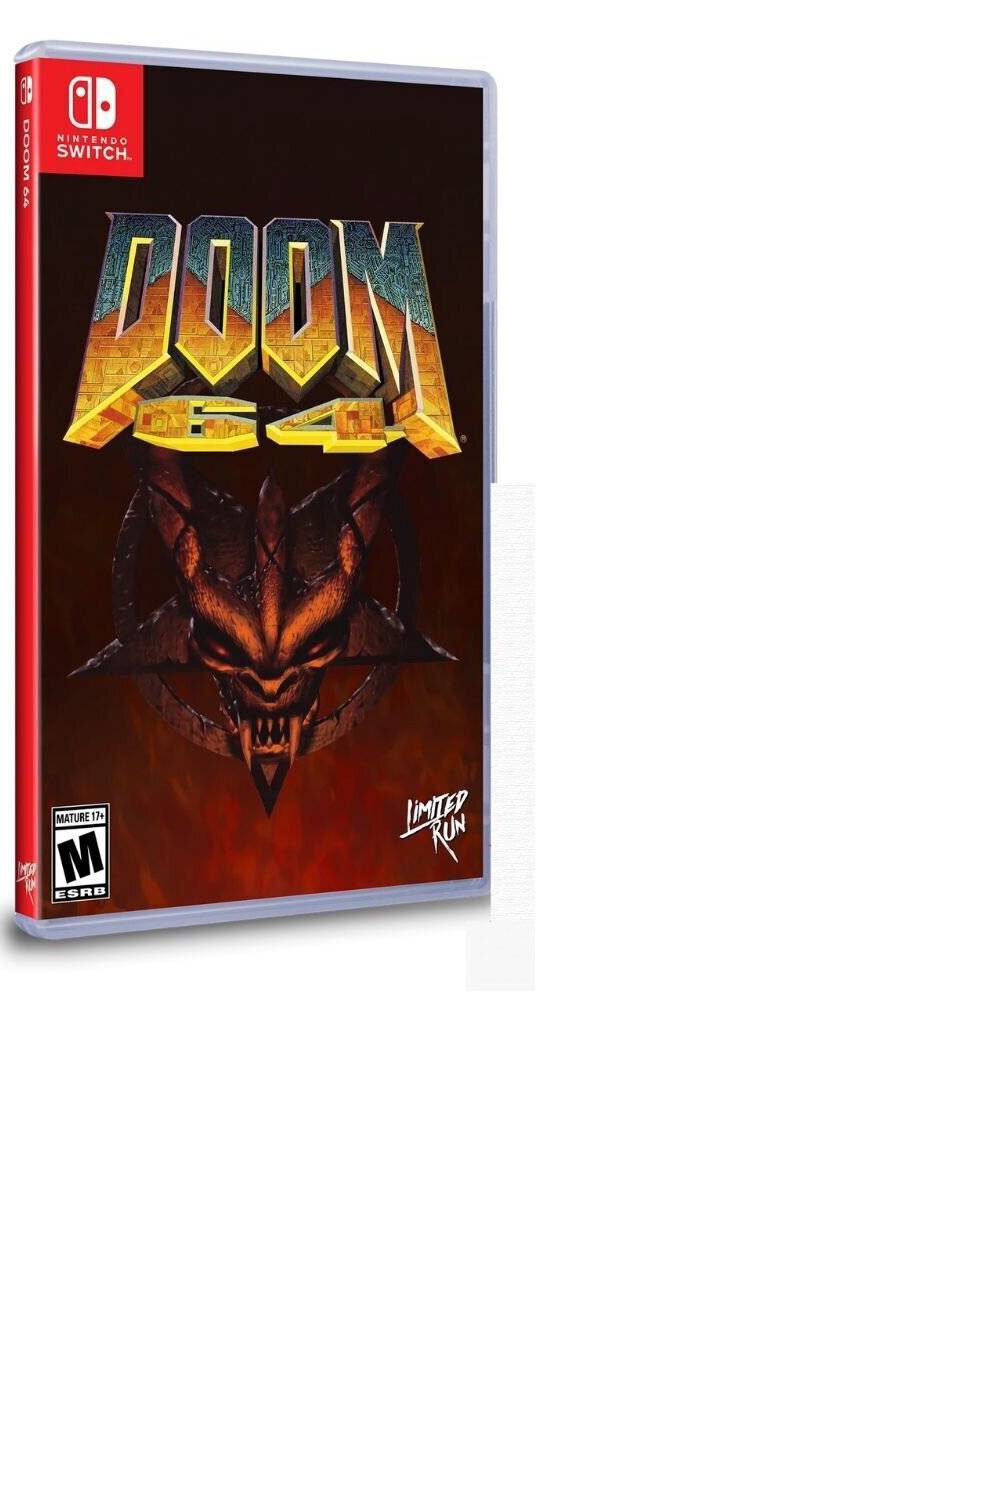 NINTENDO - Doom 64 - Nintendo Switch